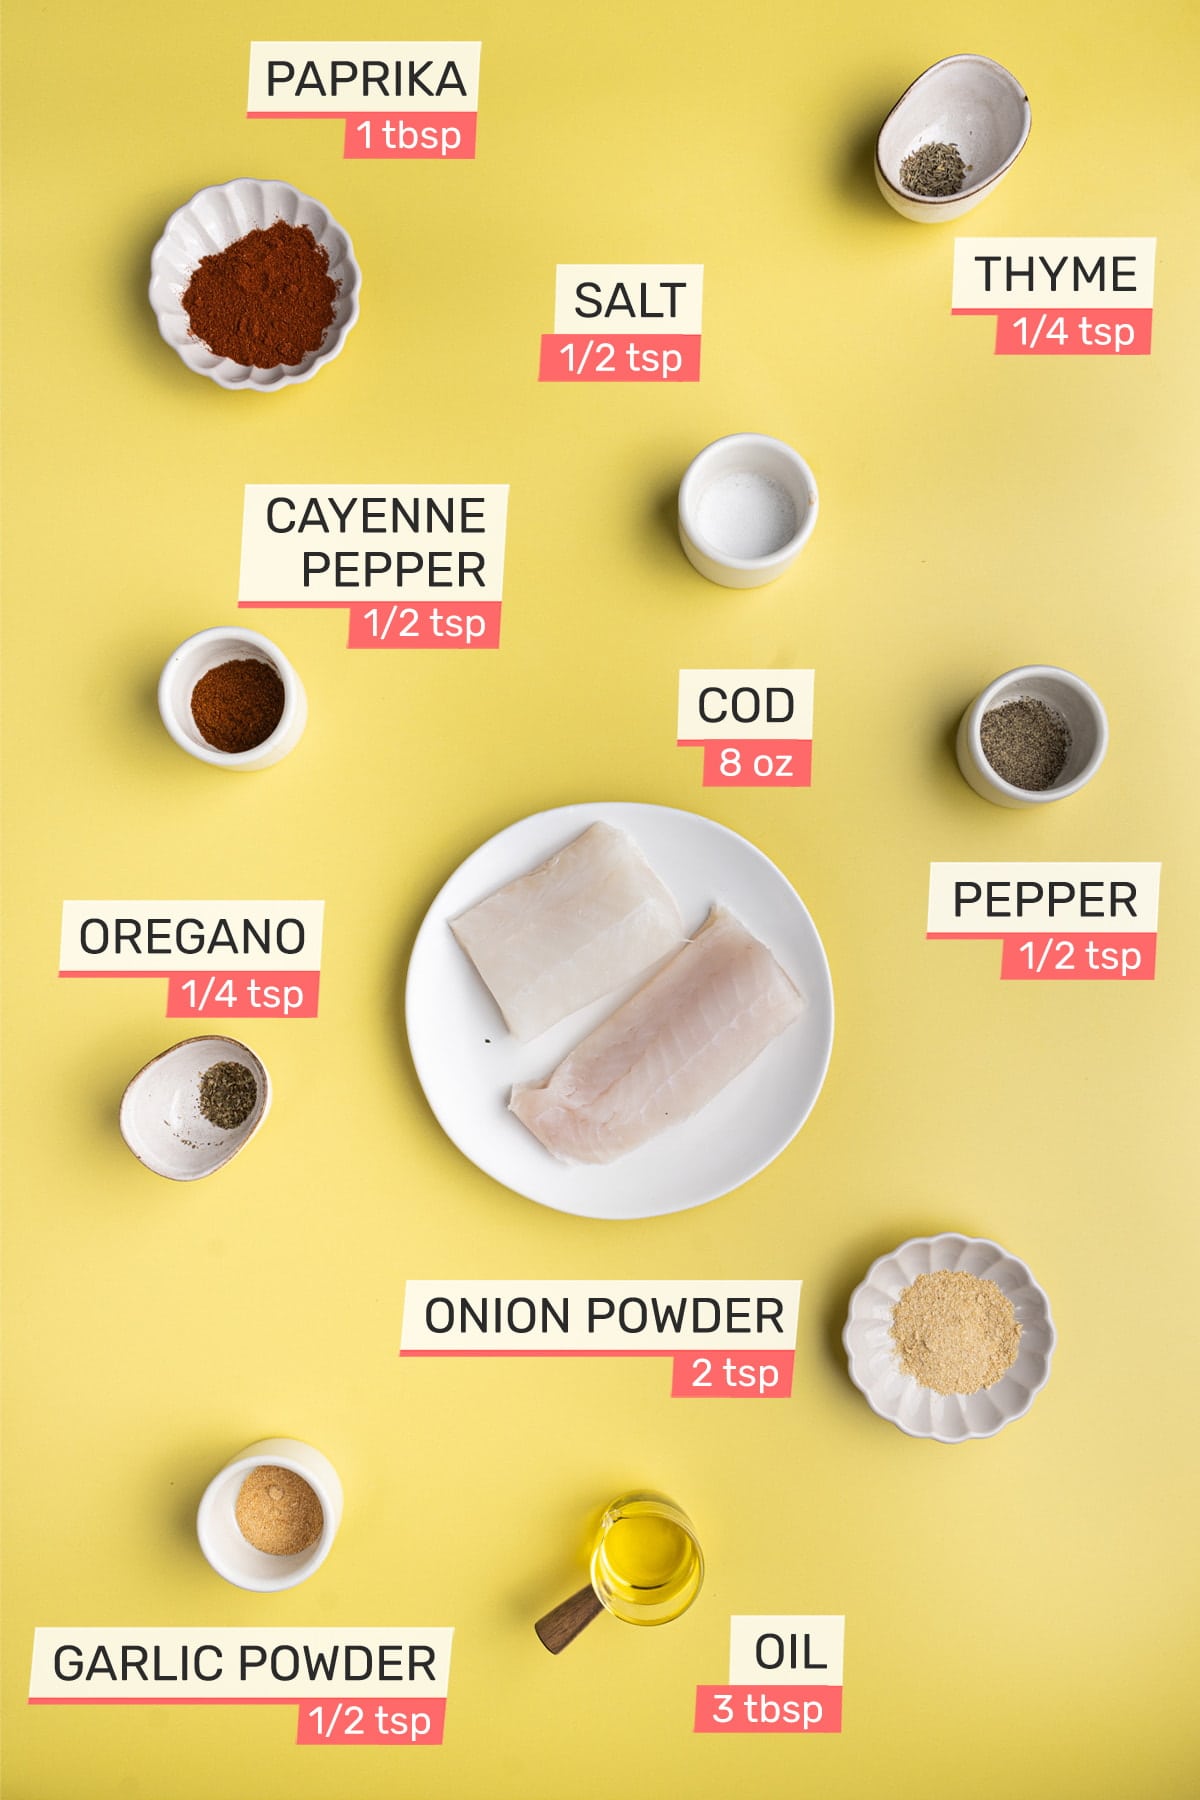 Overhead view of all ingredients for Blackened Cod - paprika, salt, thyme, cayenne pepper, cod, oregano, pepper, onion powder, garlic powder, oil